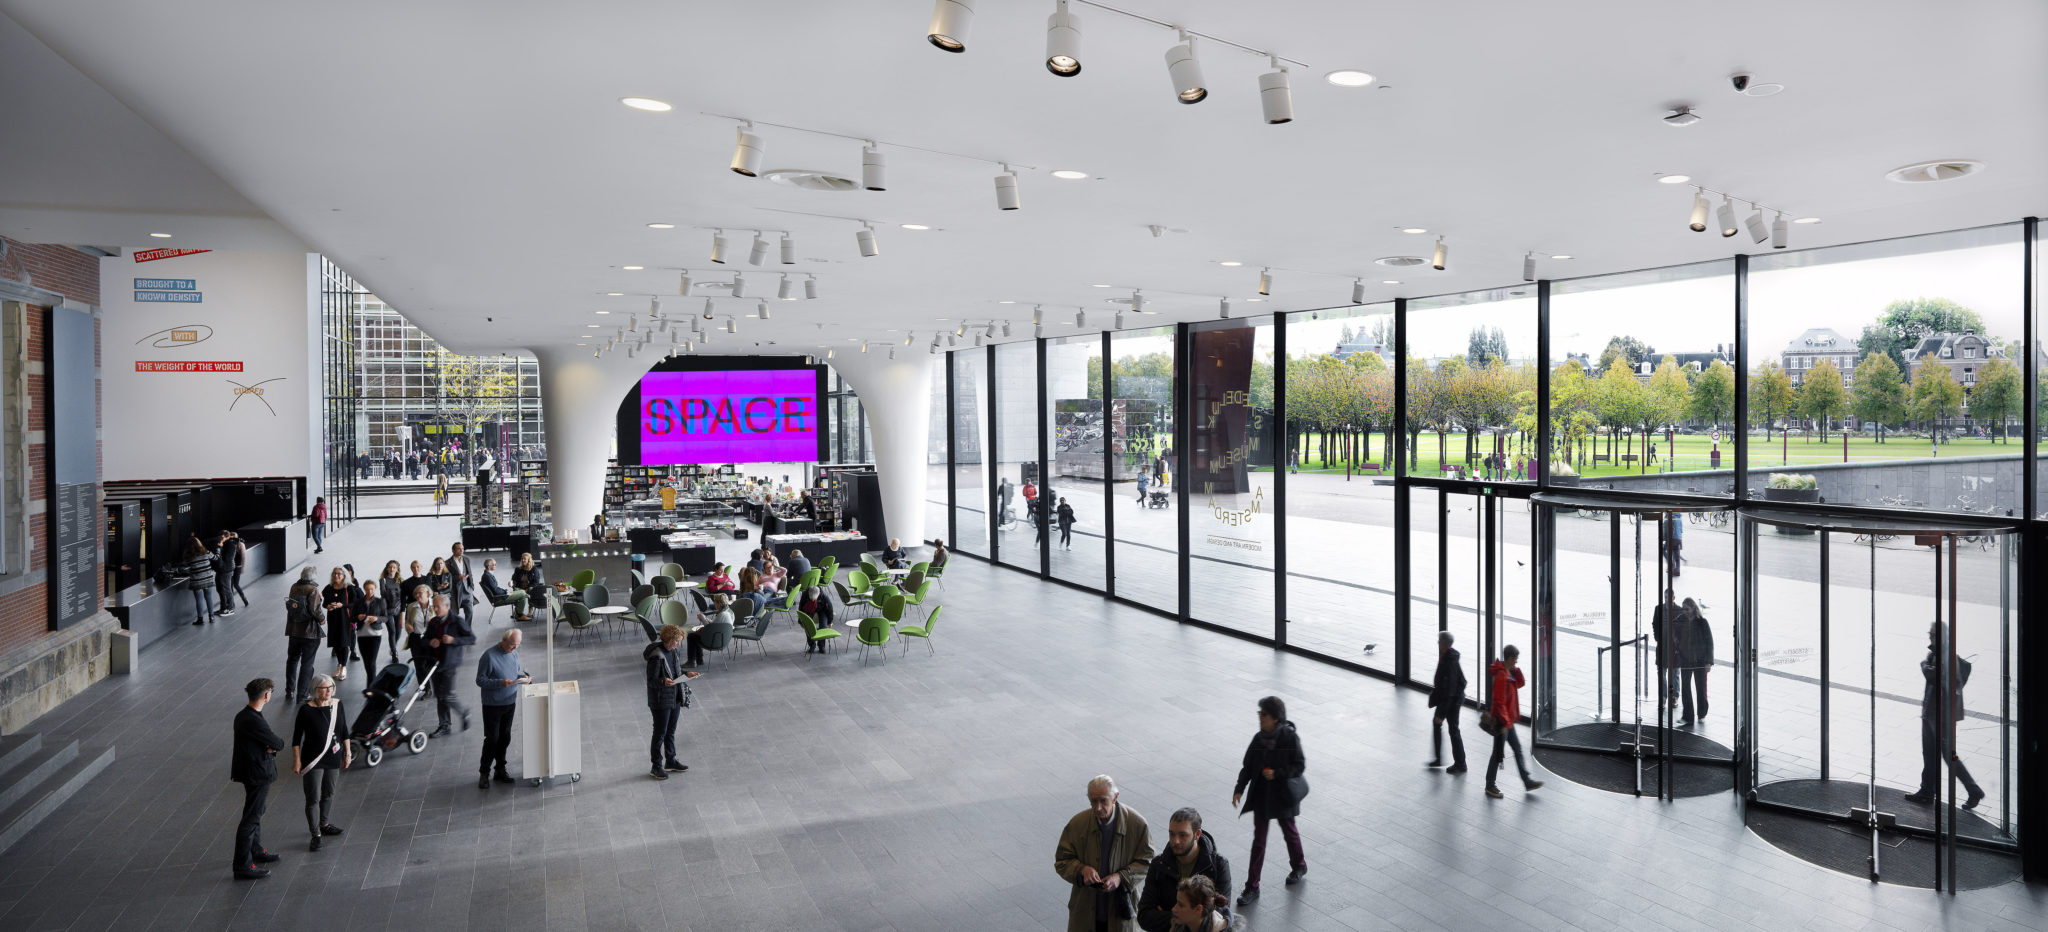 New main entrance for Stedelijk Museum